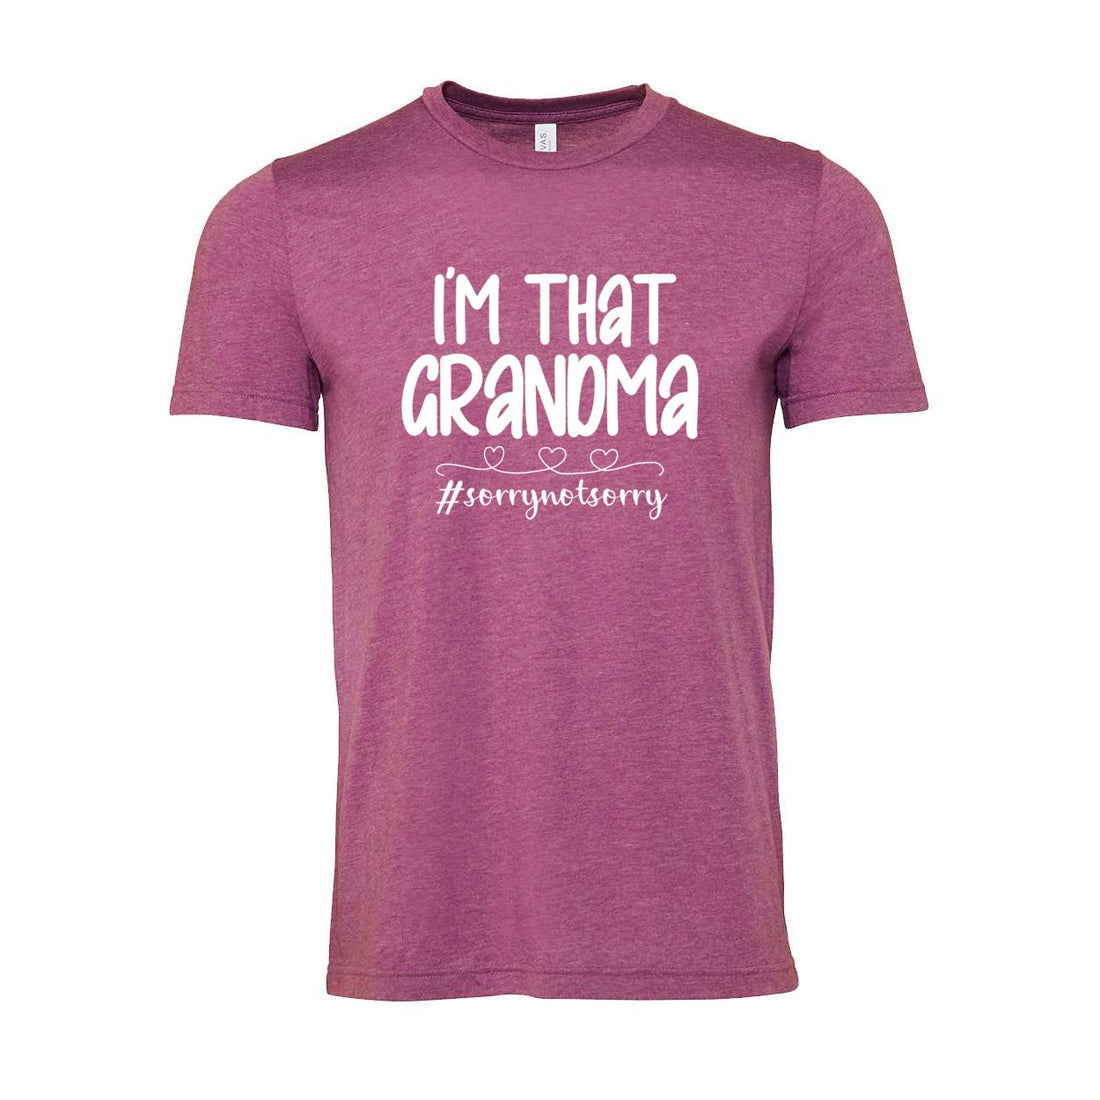 I'm That Grandma Short Sleeve Jersey Tee - T-Shirts - Positively Sassy - I'm That Grandma Short Sleeve Jersey Tee